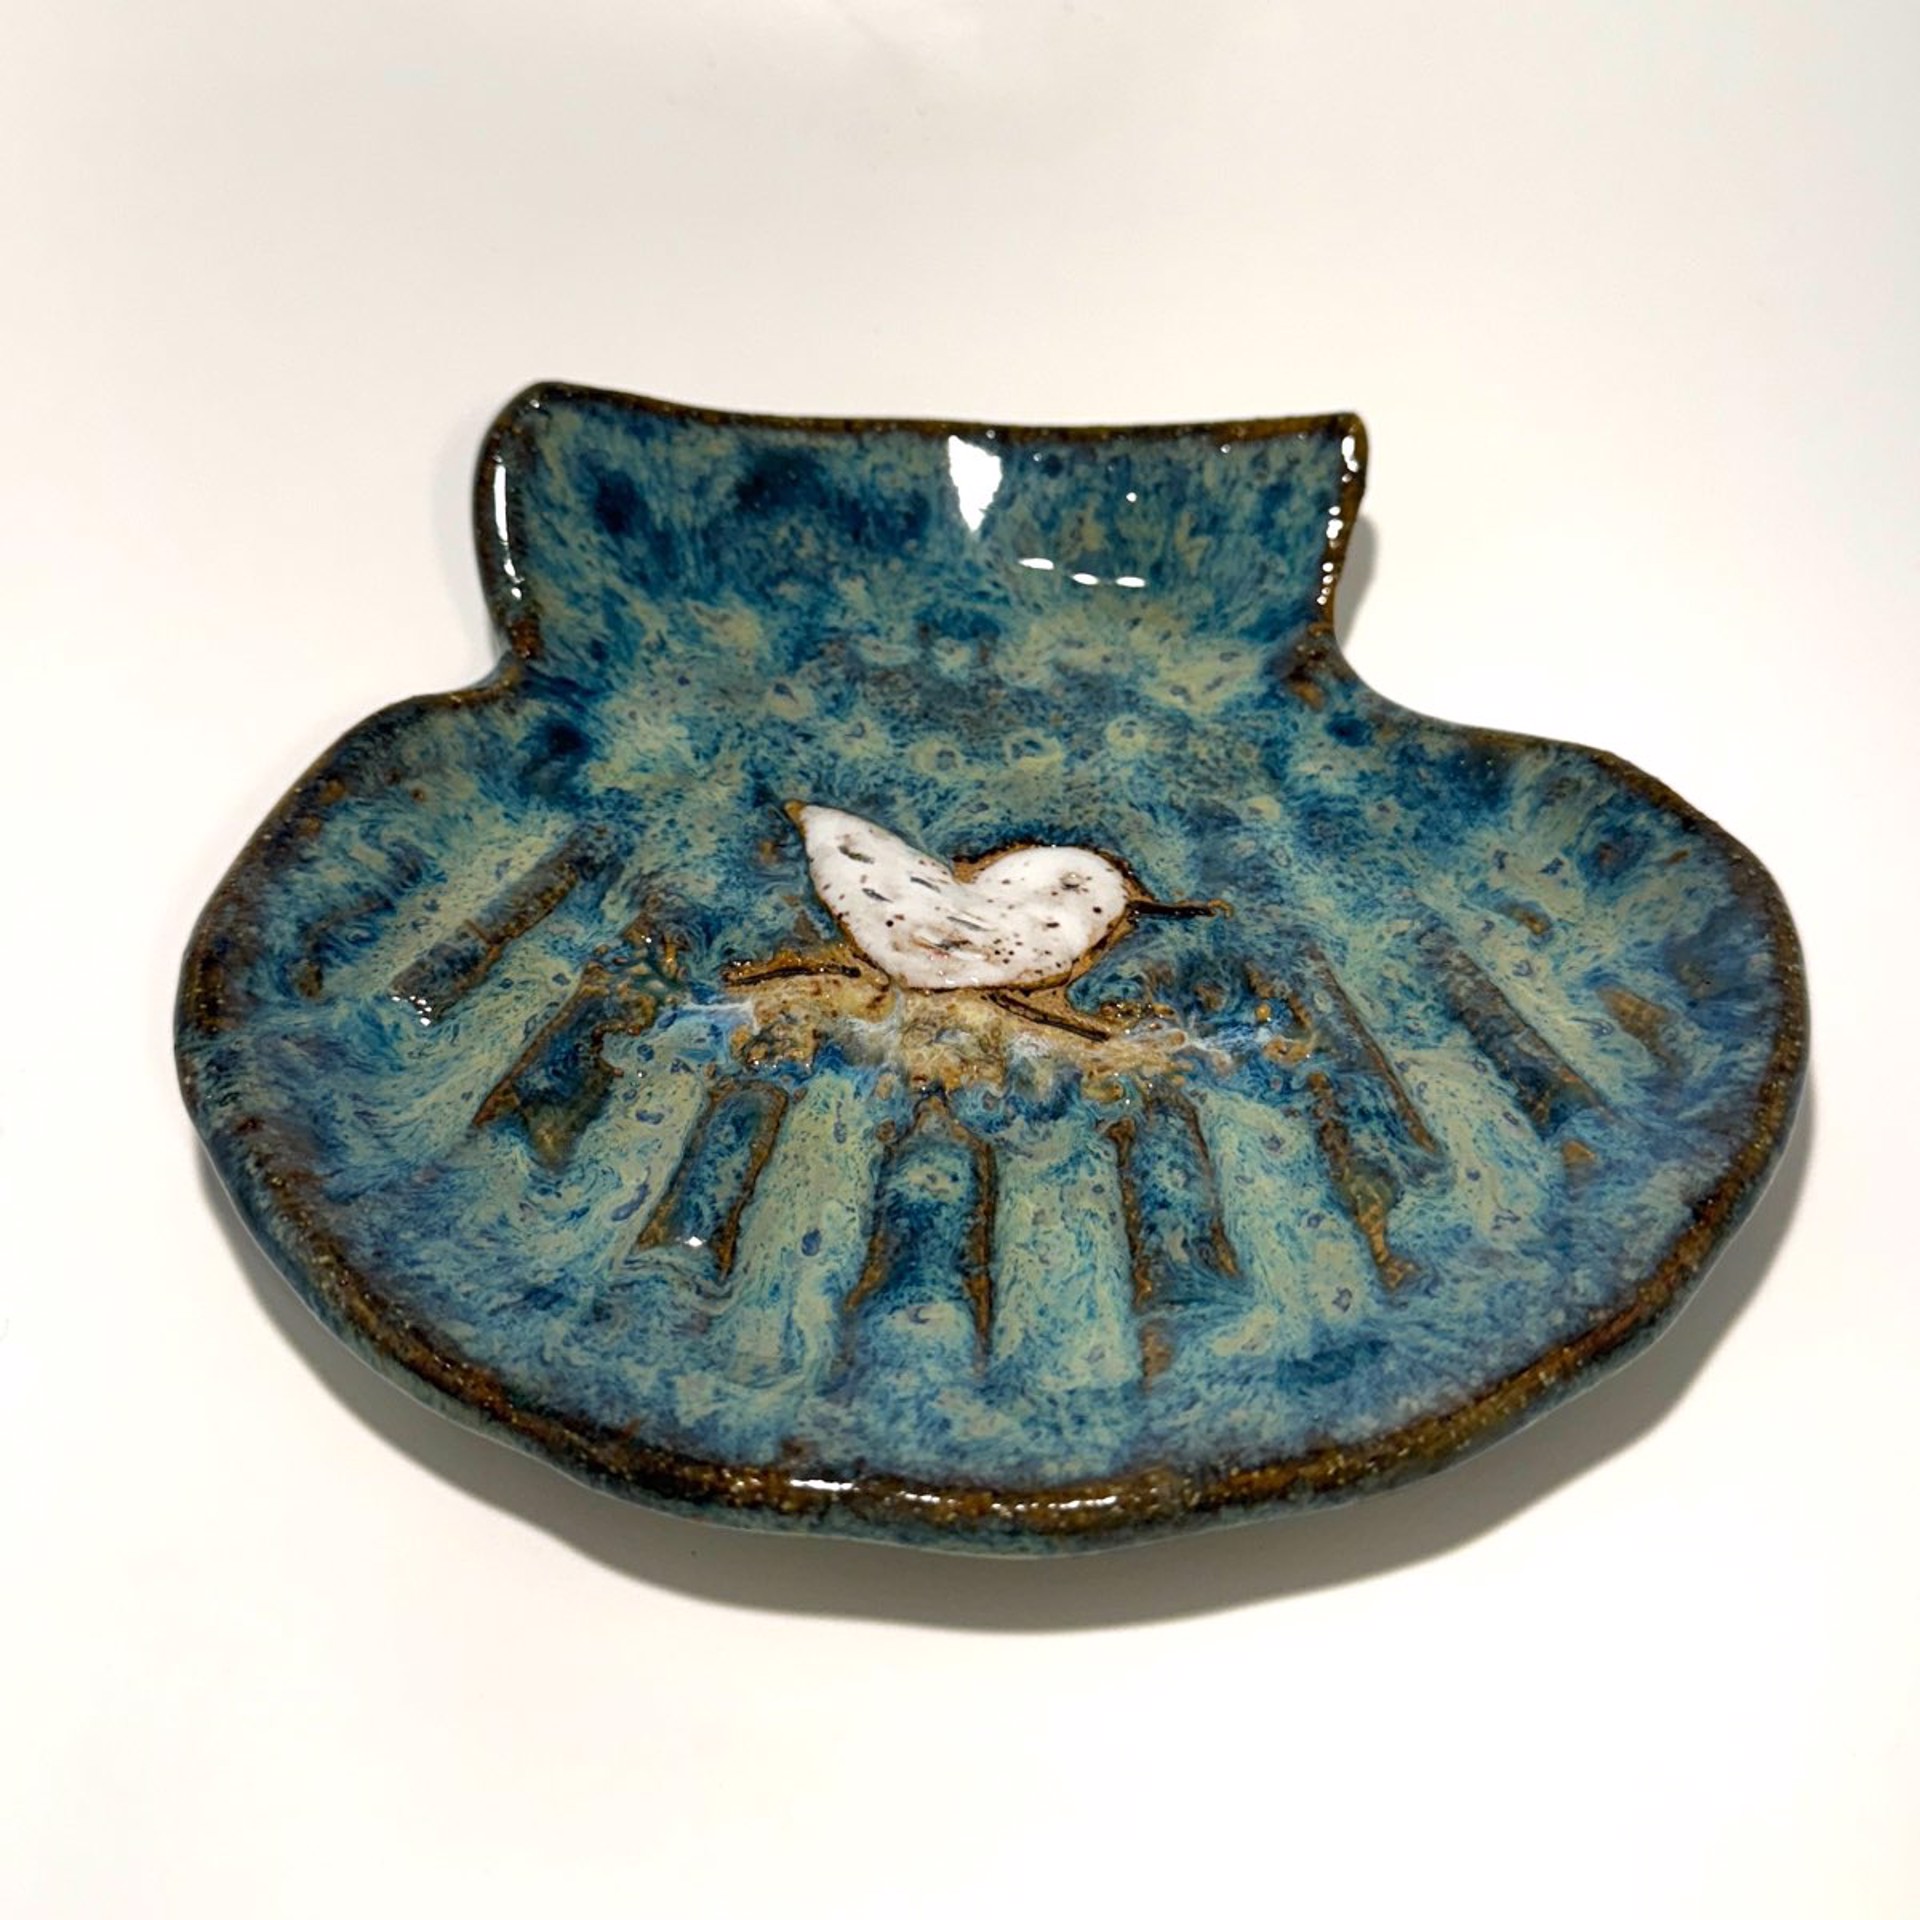 Shell Dish with Sandpiper (Blue Glaze) LG24-1231 by Jim & Steffi Logan